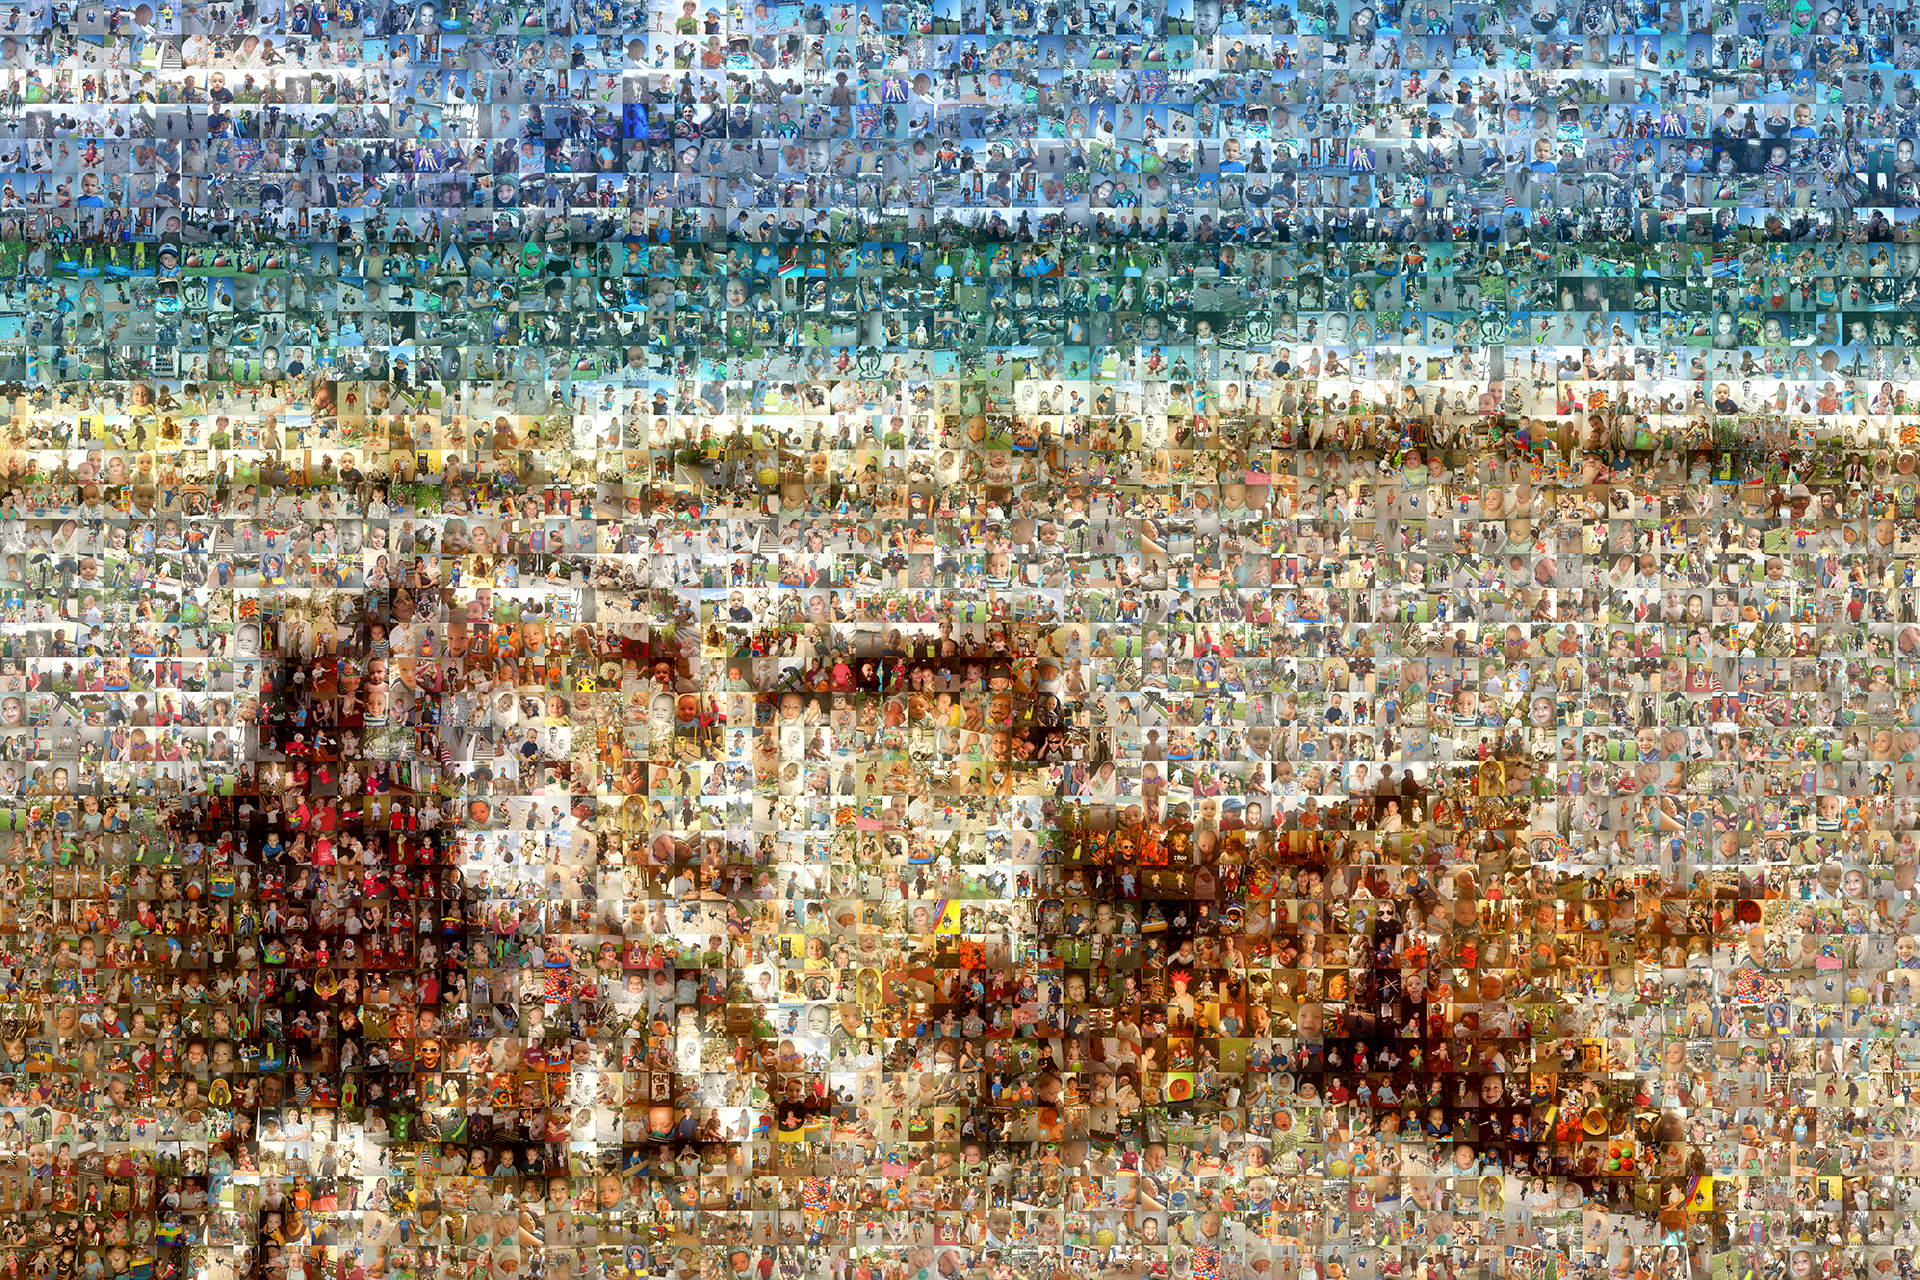 photo mosaic created using 1486 family photos